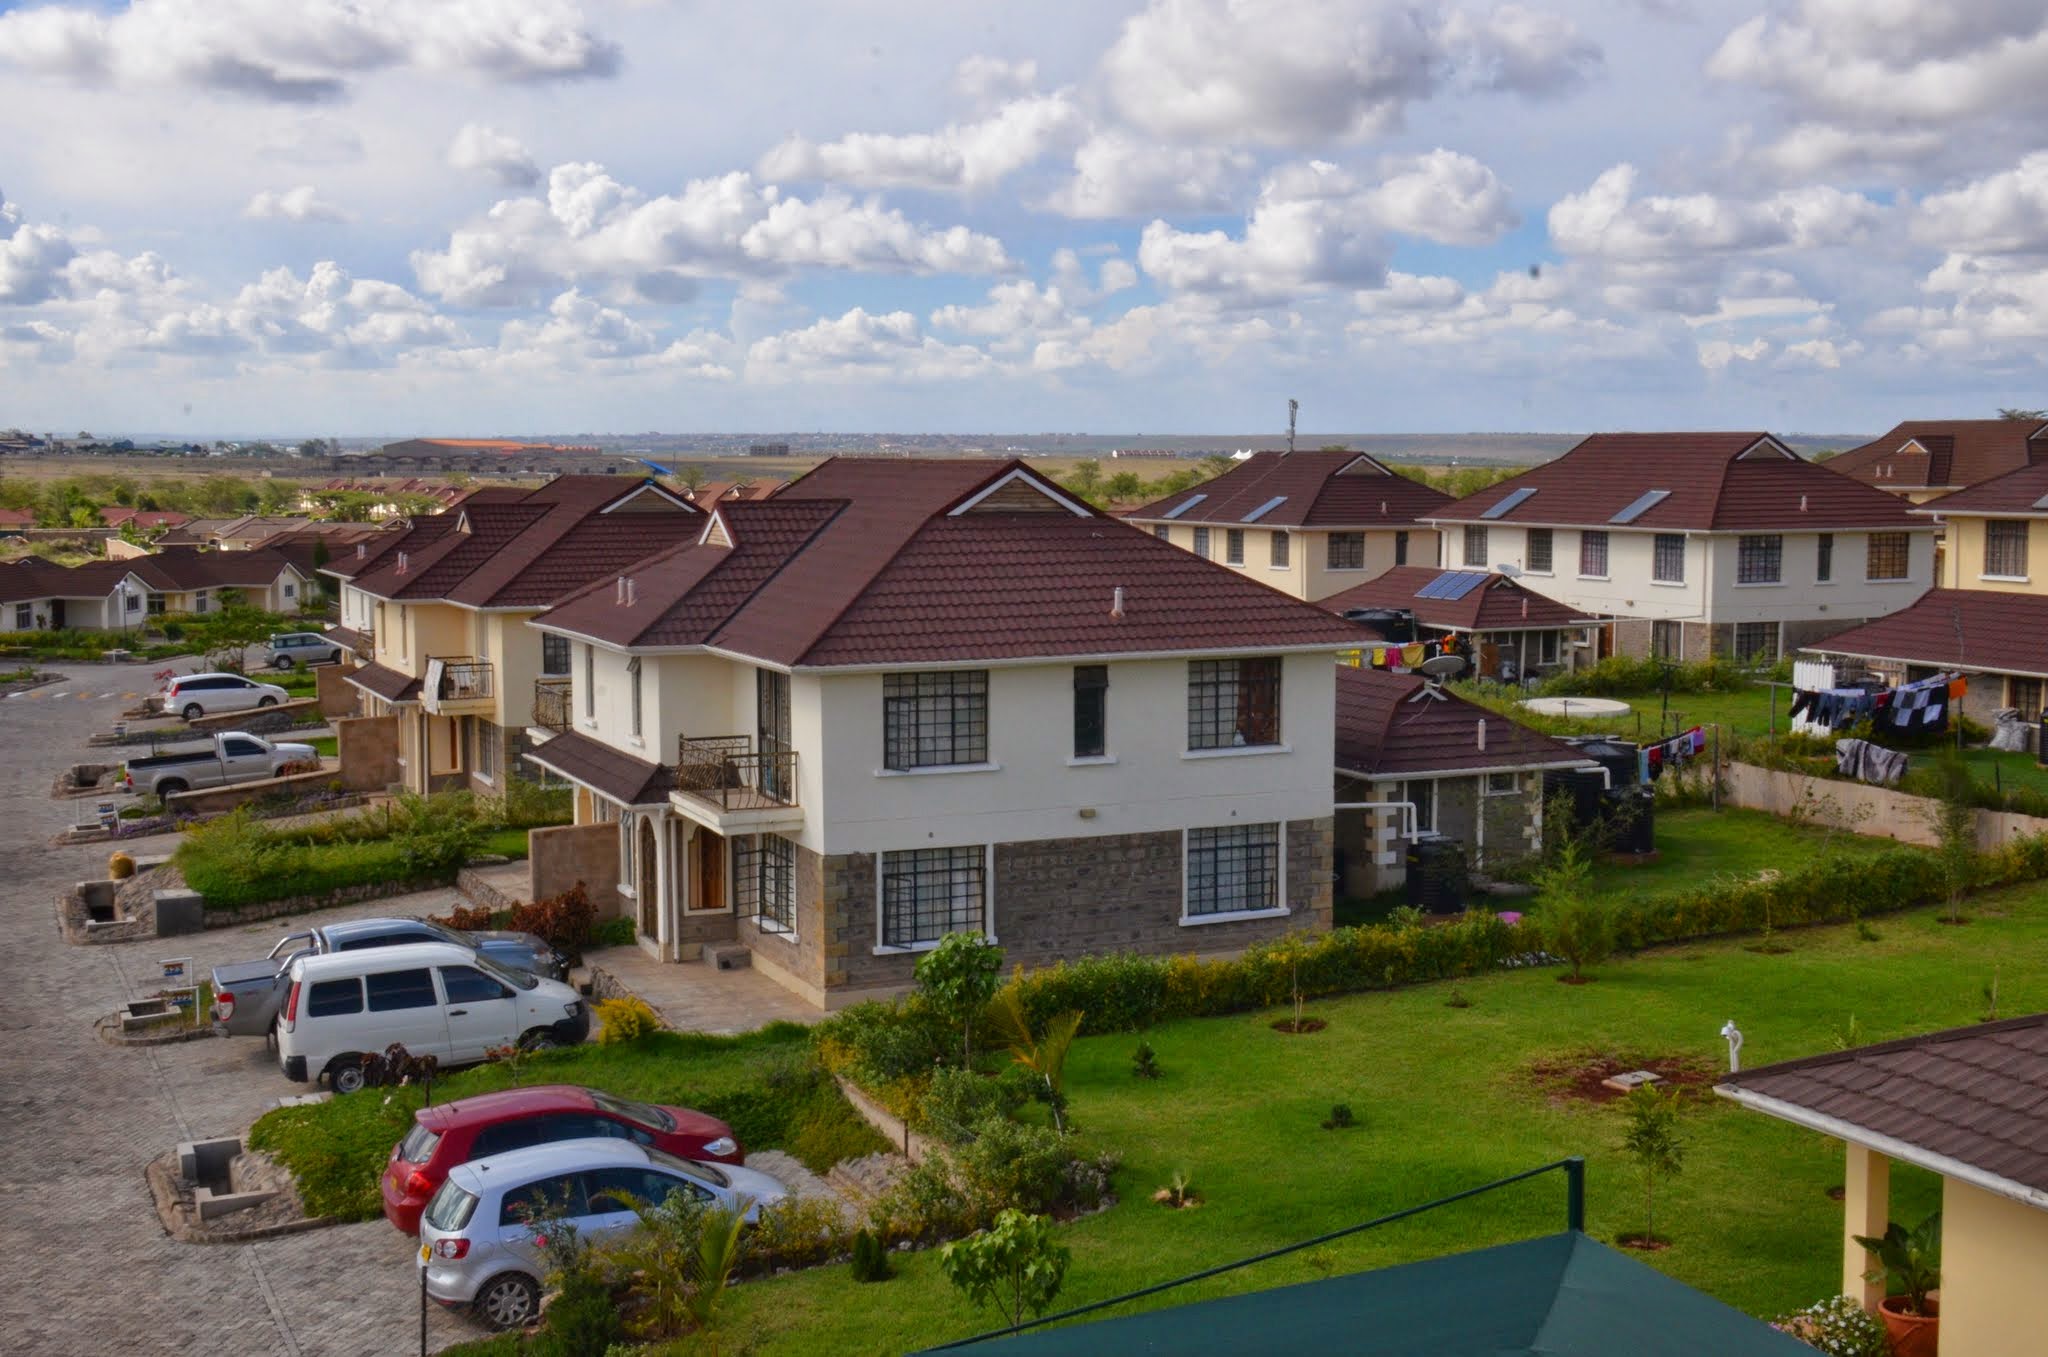 Kenya Aims To Raise 5 Billion Shillings To Plug Housing Deficit